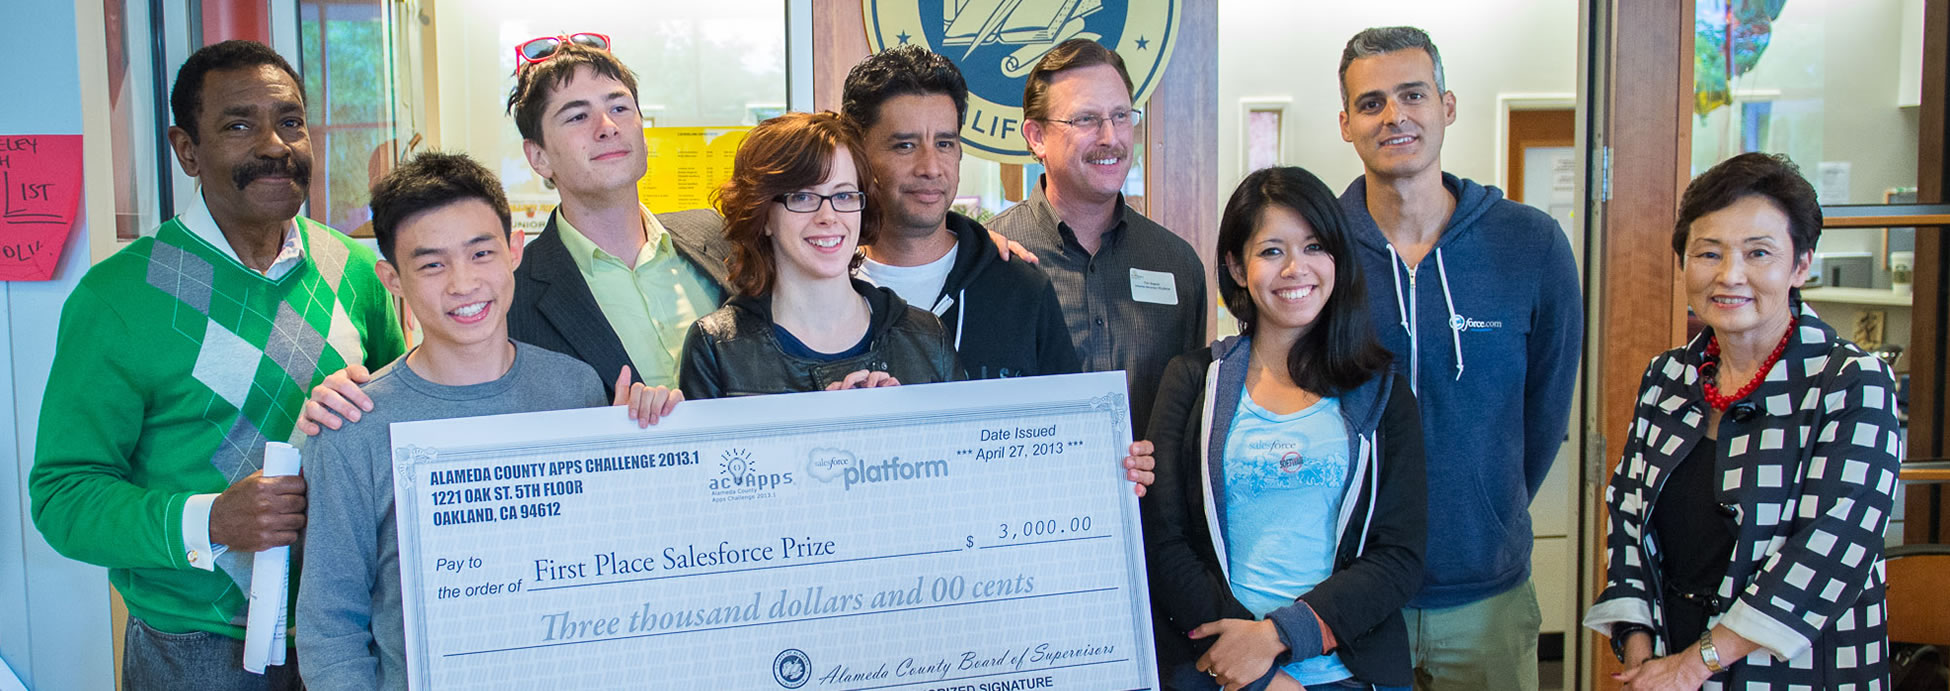 Photo of previous hackathon winners.